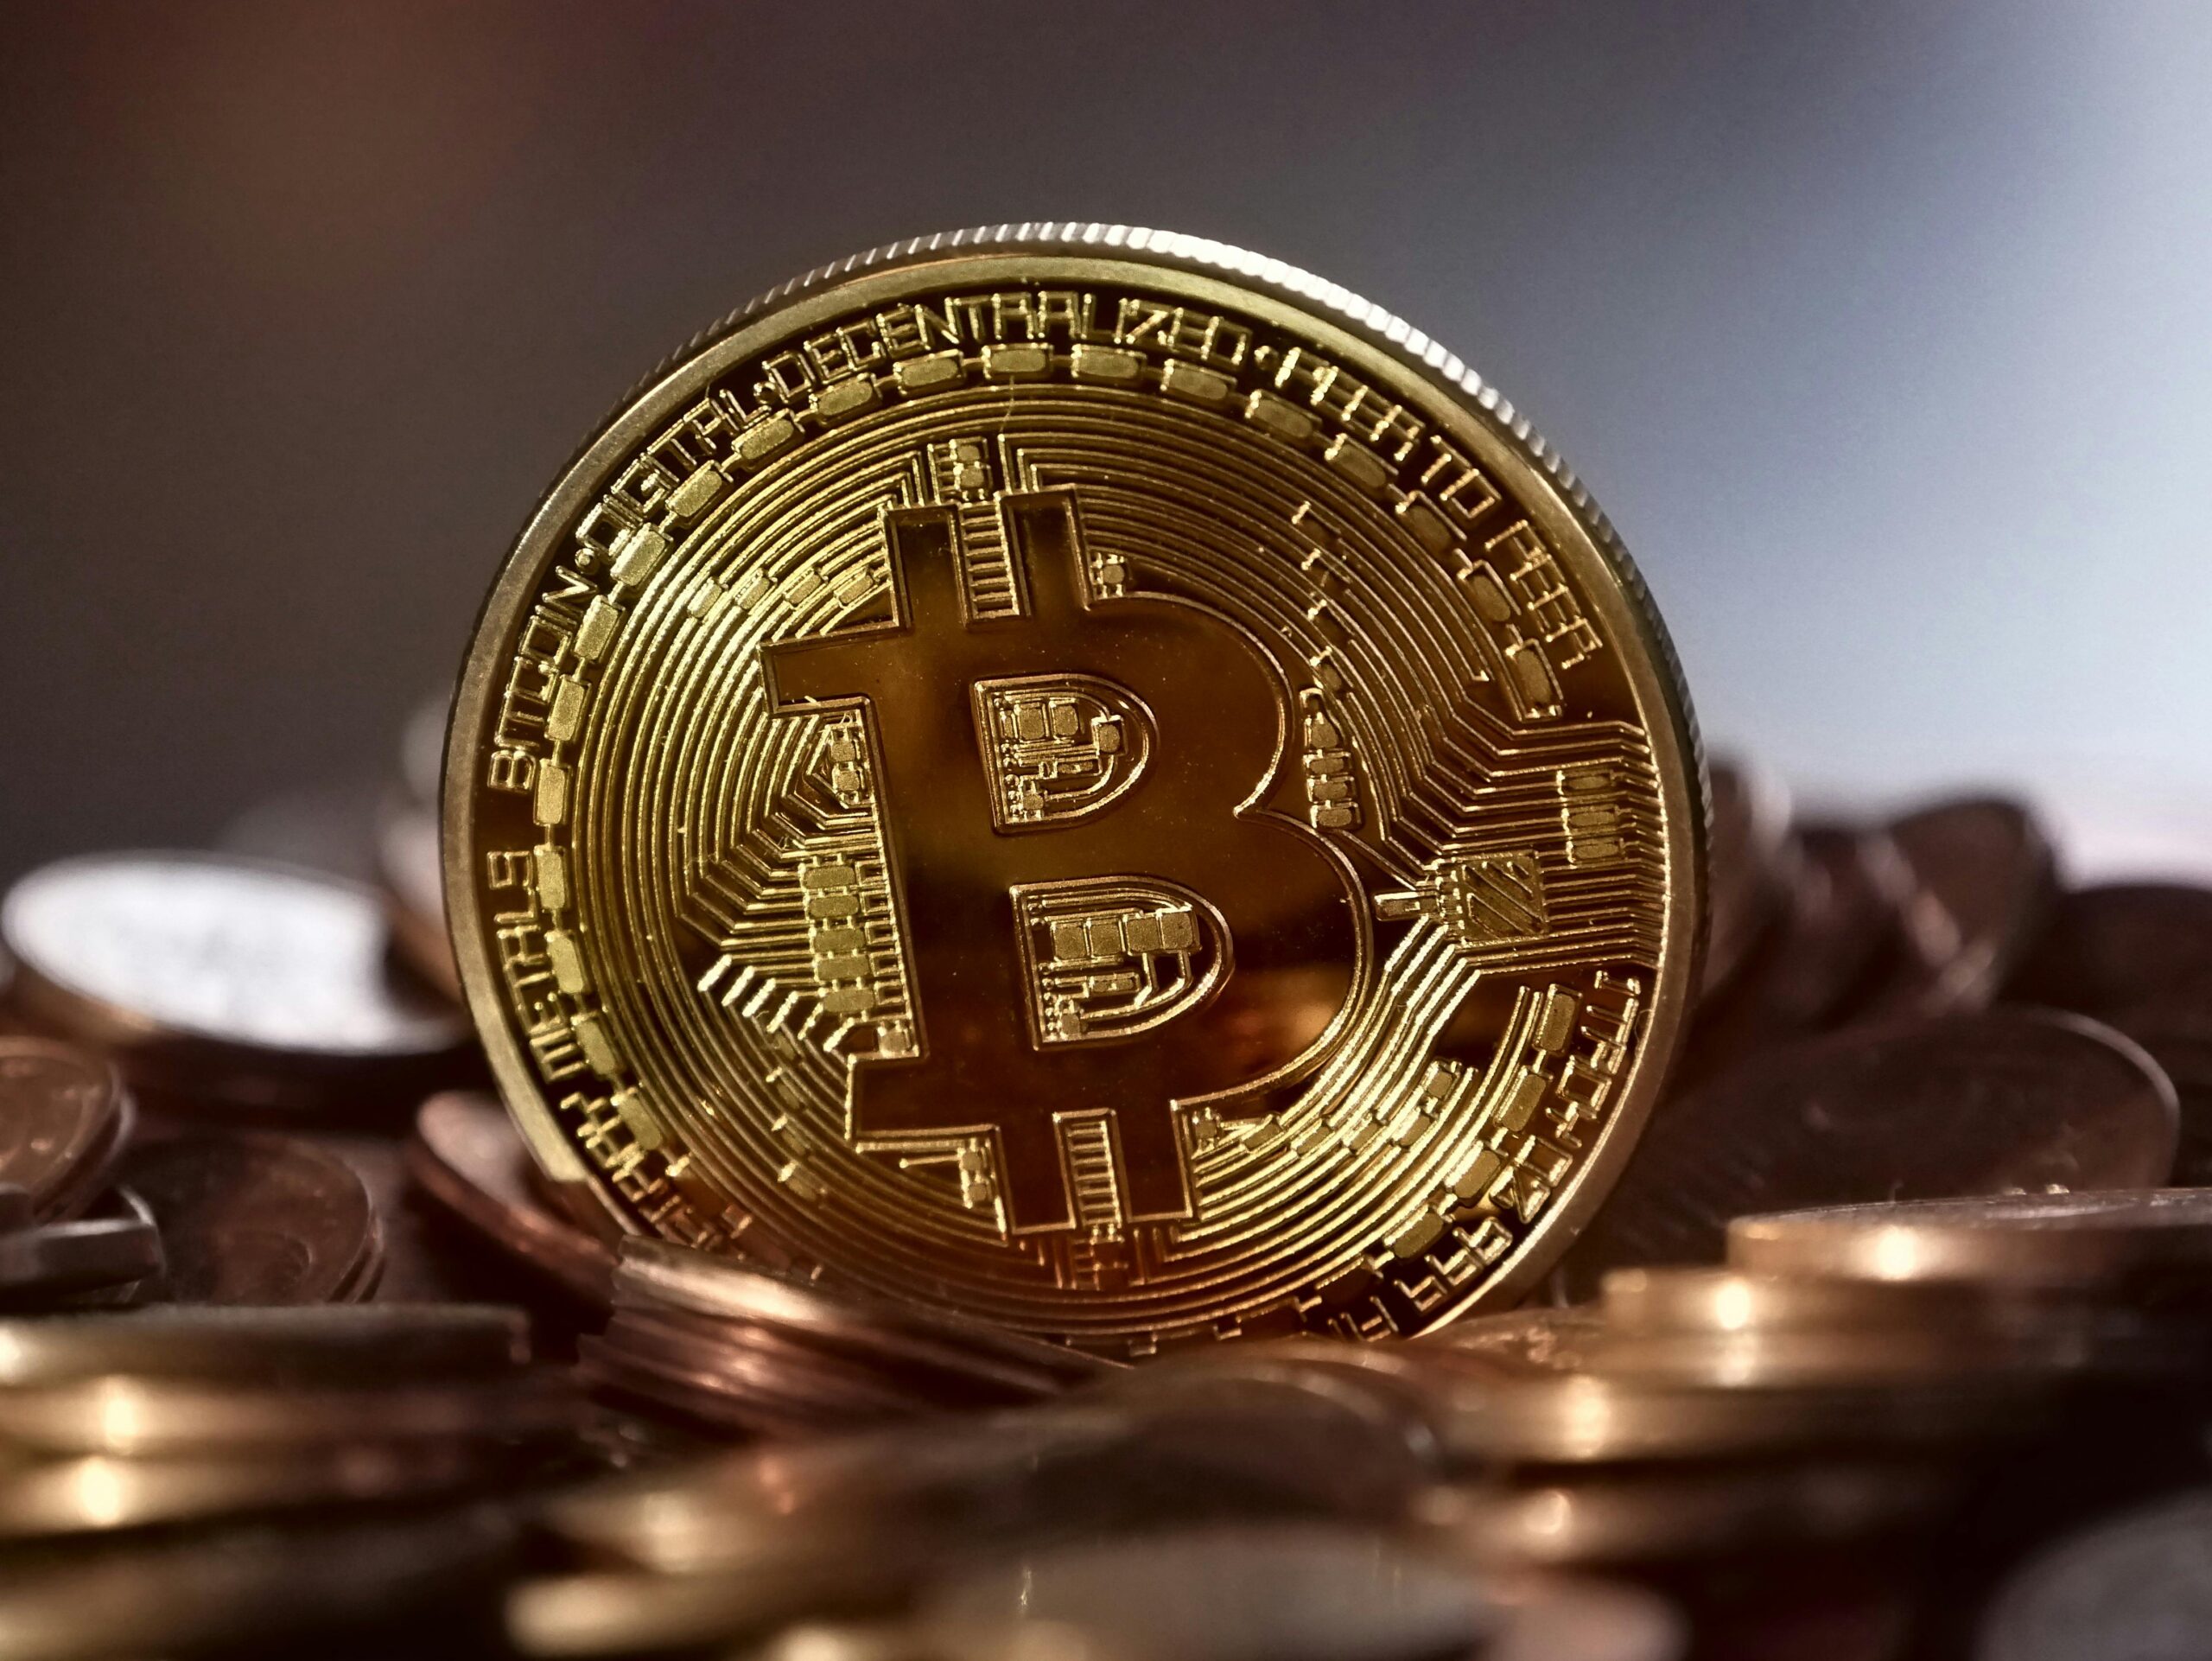 Bitcoin Sales Agreement Template